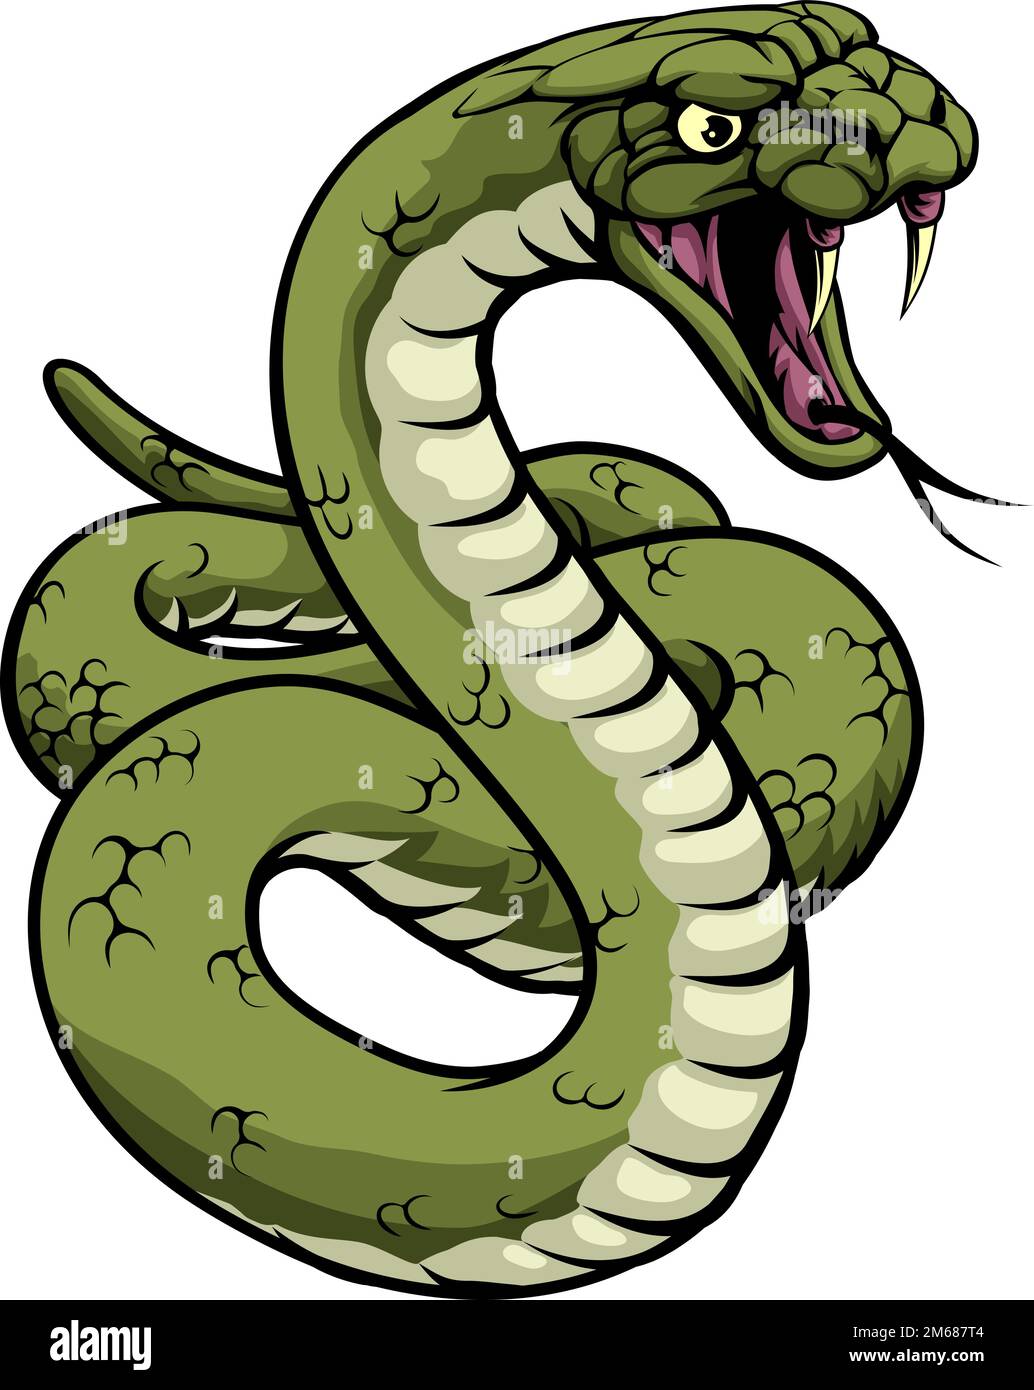 Snake Animal Sport Team Cartoon Animal Mascot Illustrazione Vettoriale